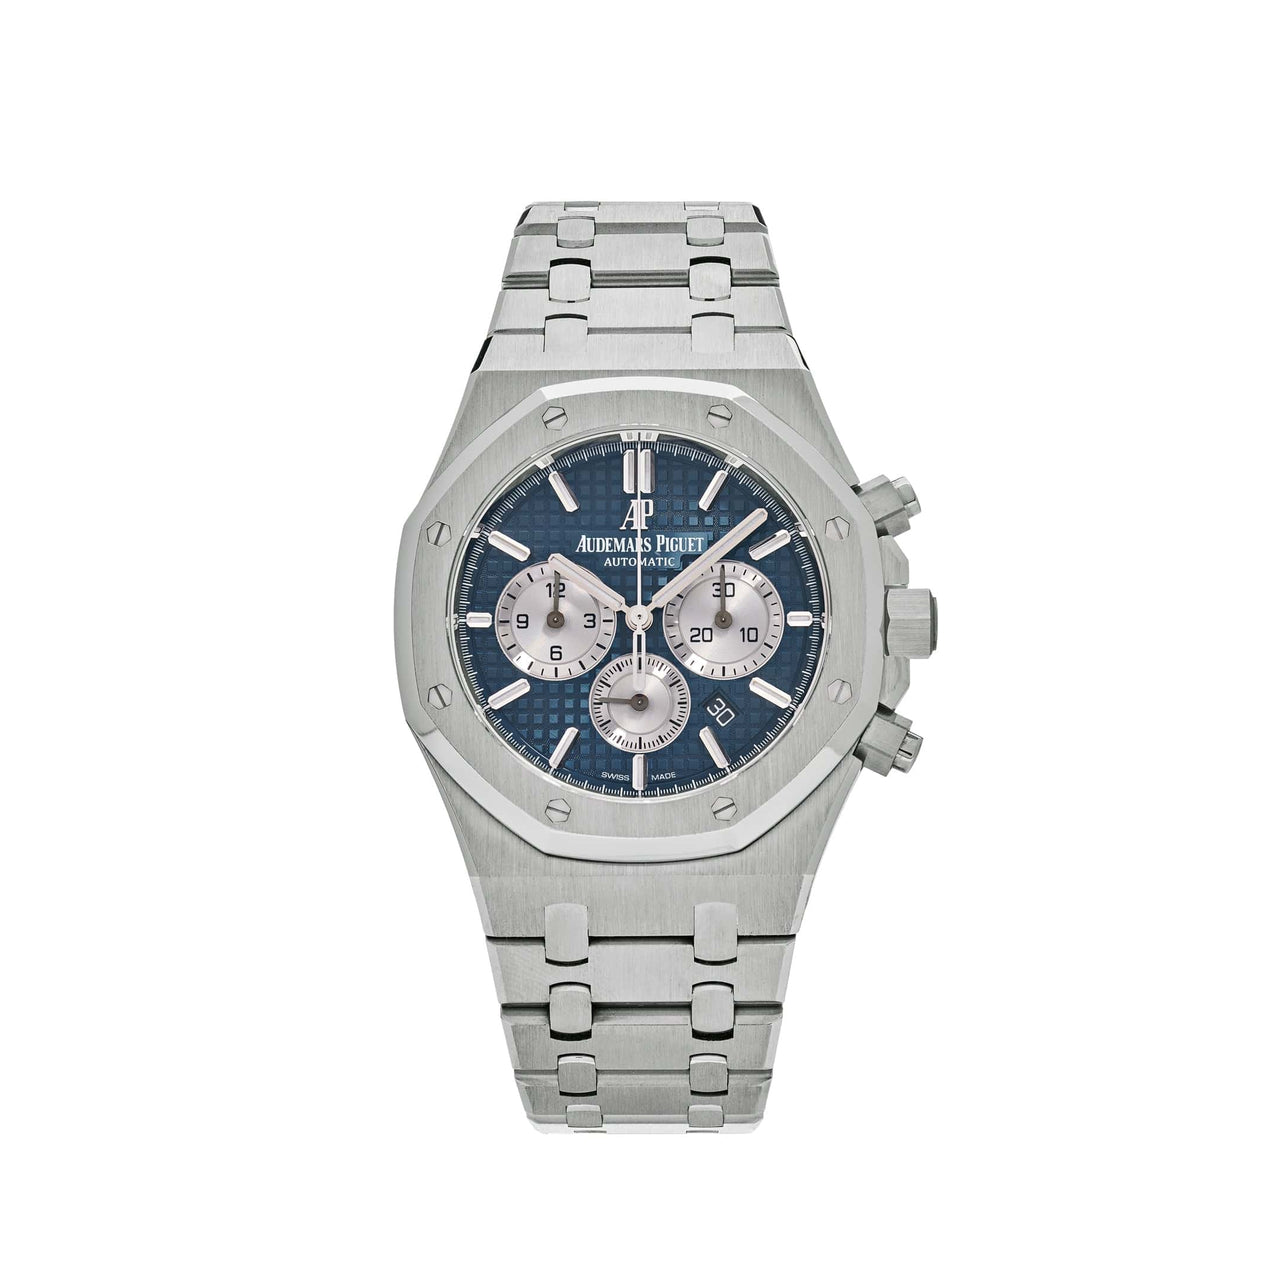 Luxury Watch Audemars Piguet Royal Oak Selfwinding Chronograph 41mm Steel Blue Dial 26331ST.OO.1220ST.01 Wrist Aficionado